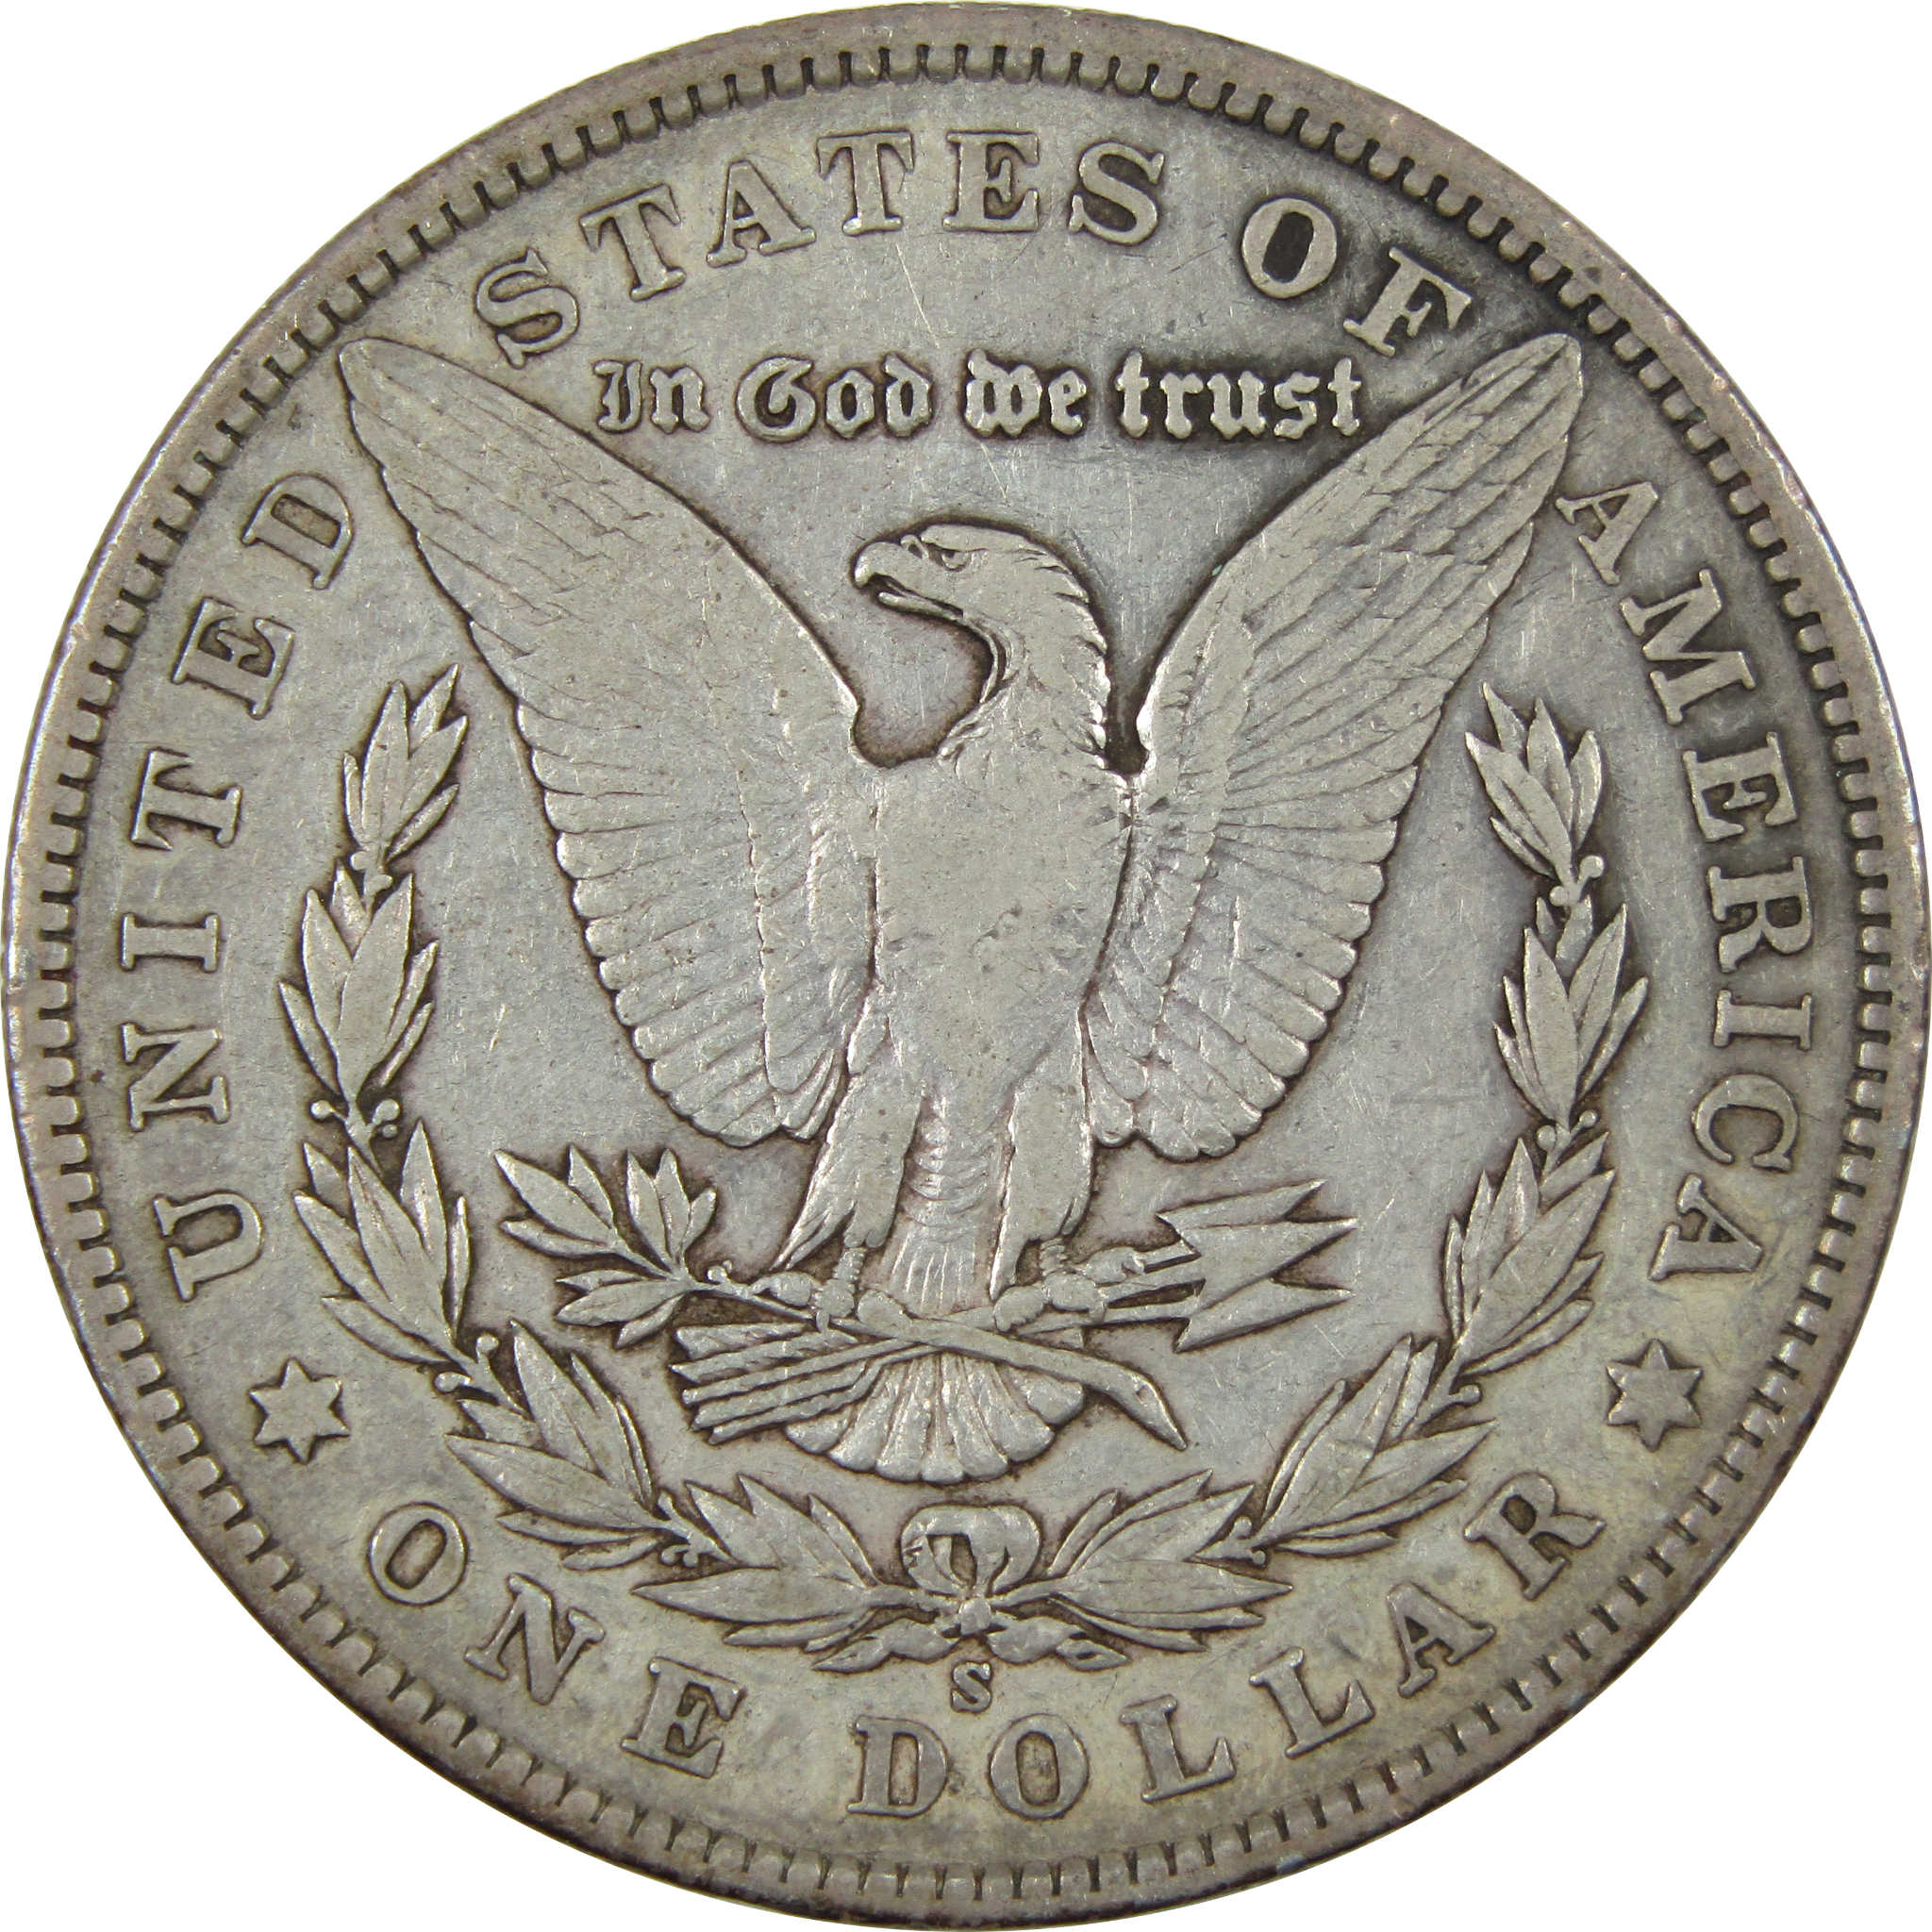 1902 S Morgan Dollar VF Very Fine Silver $1 Coin SKU:I14075 - Morgan coin - Morgan silver dollar - Morgan silver dollar for sale - Profile Coins &amp; Collectibles